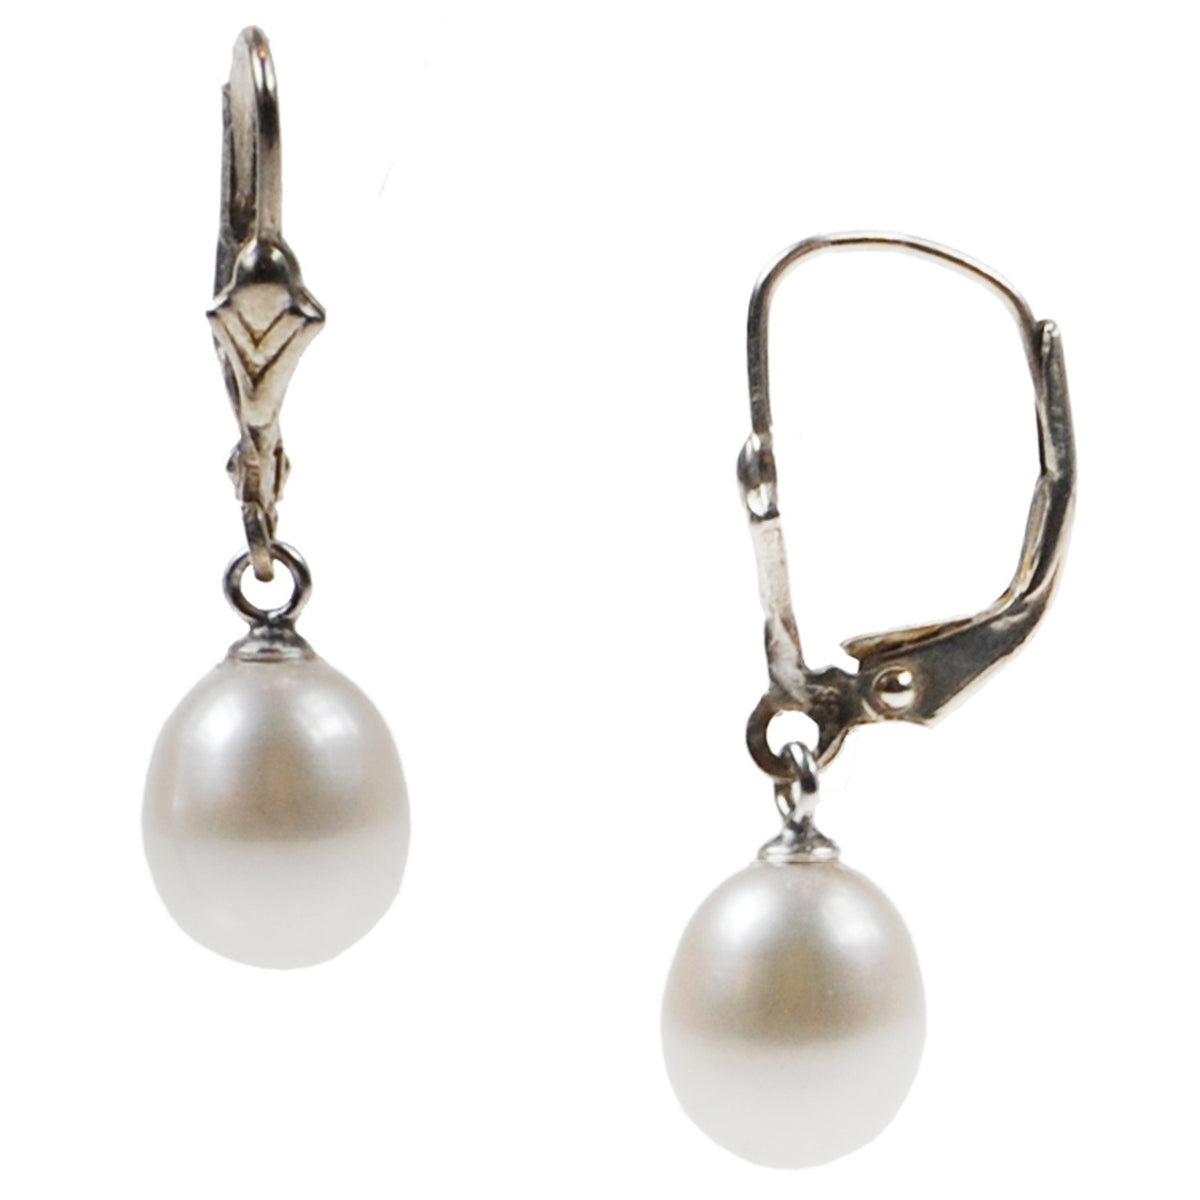 Pearl Drop Earrings on French Fittings